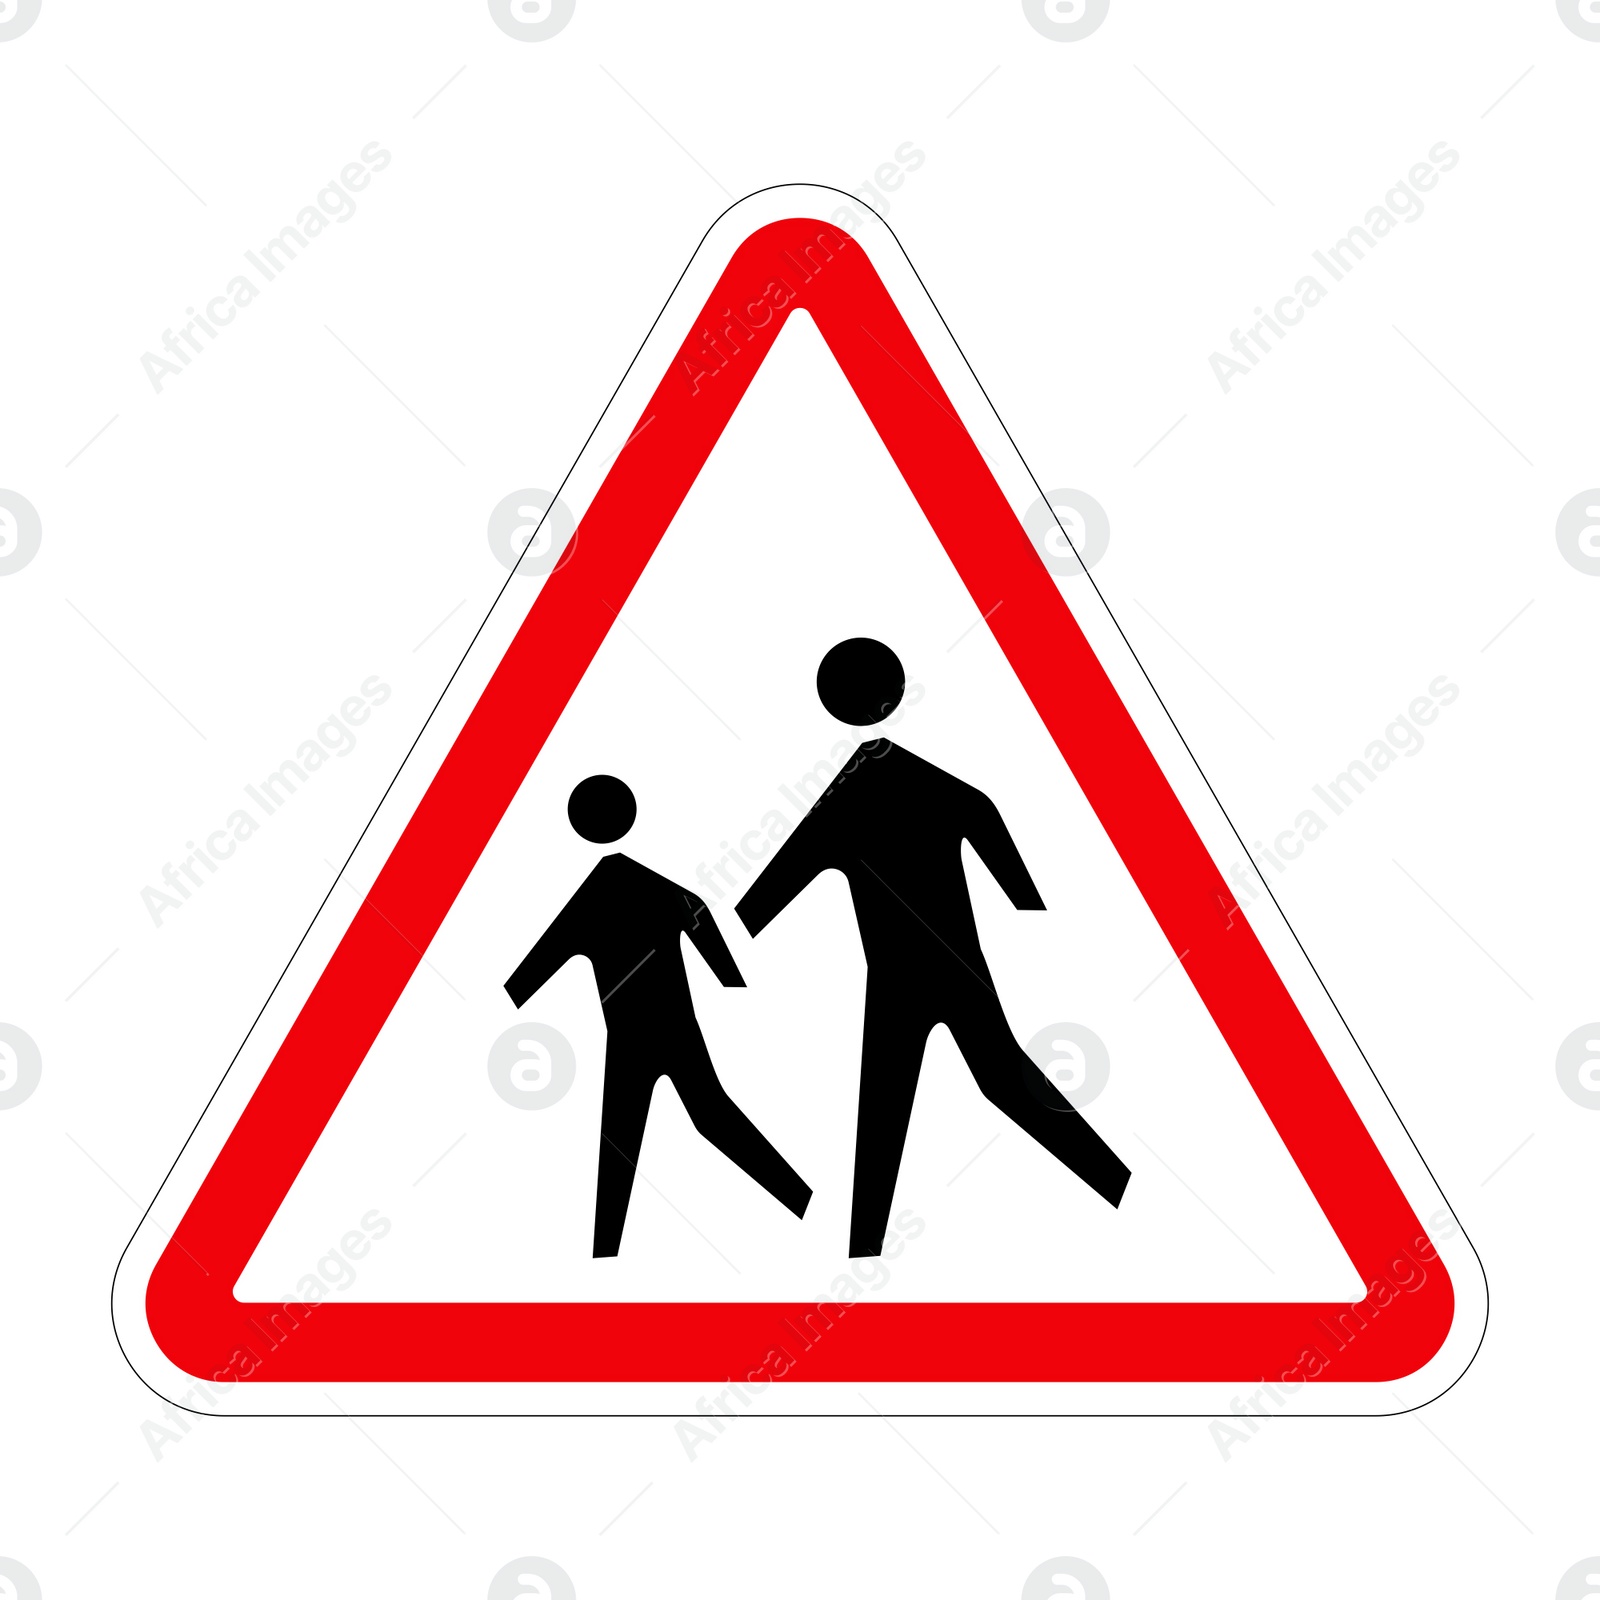 Illustration of Traffic sign SCHOOL CROSSWALK on white background, illustration